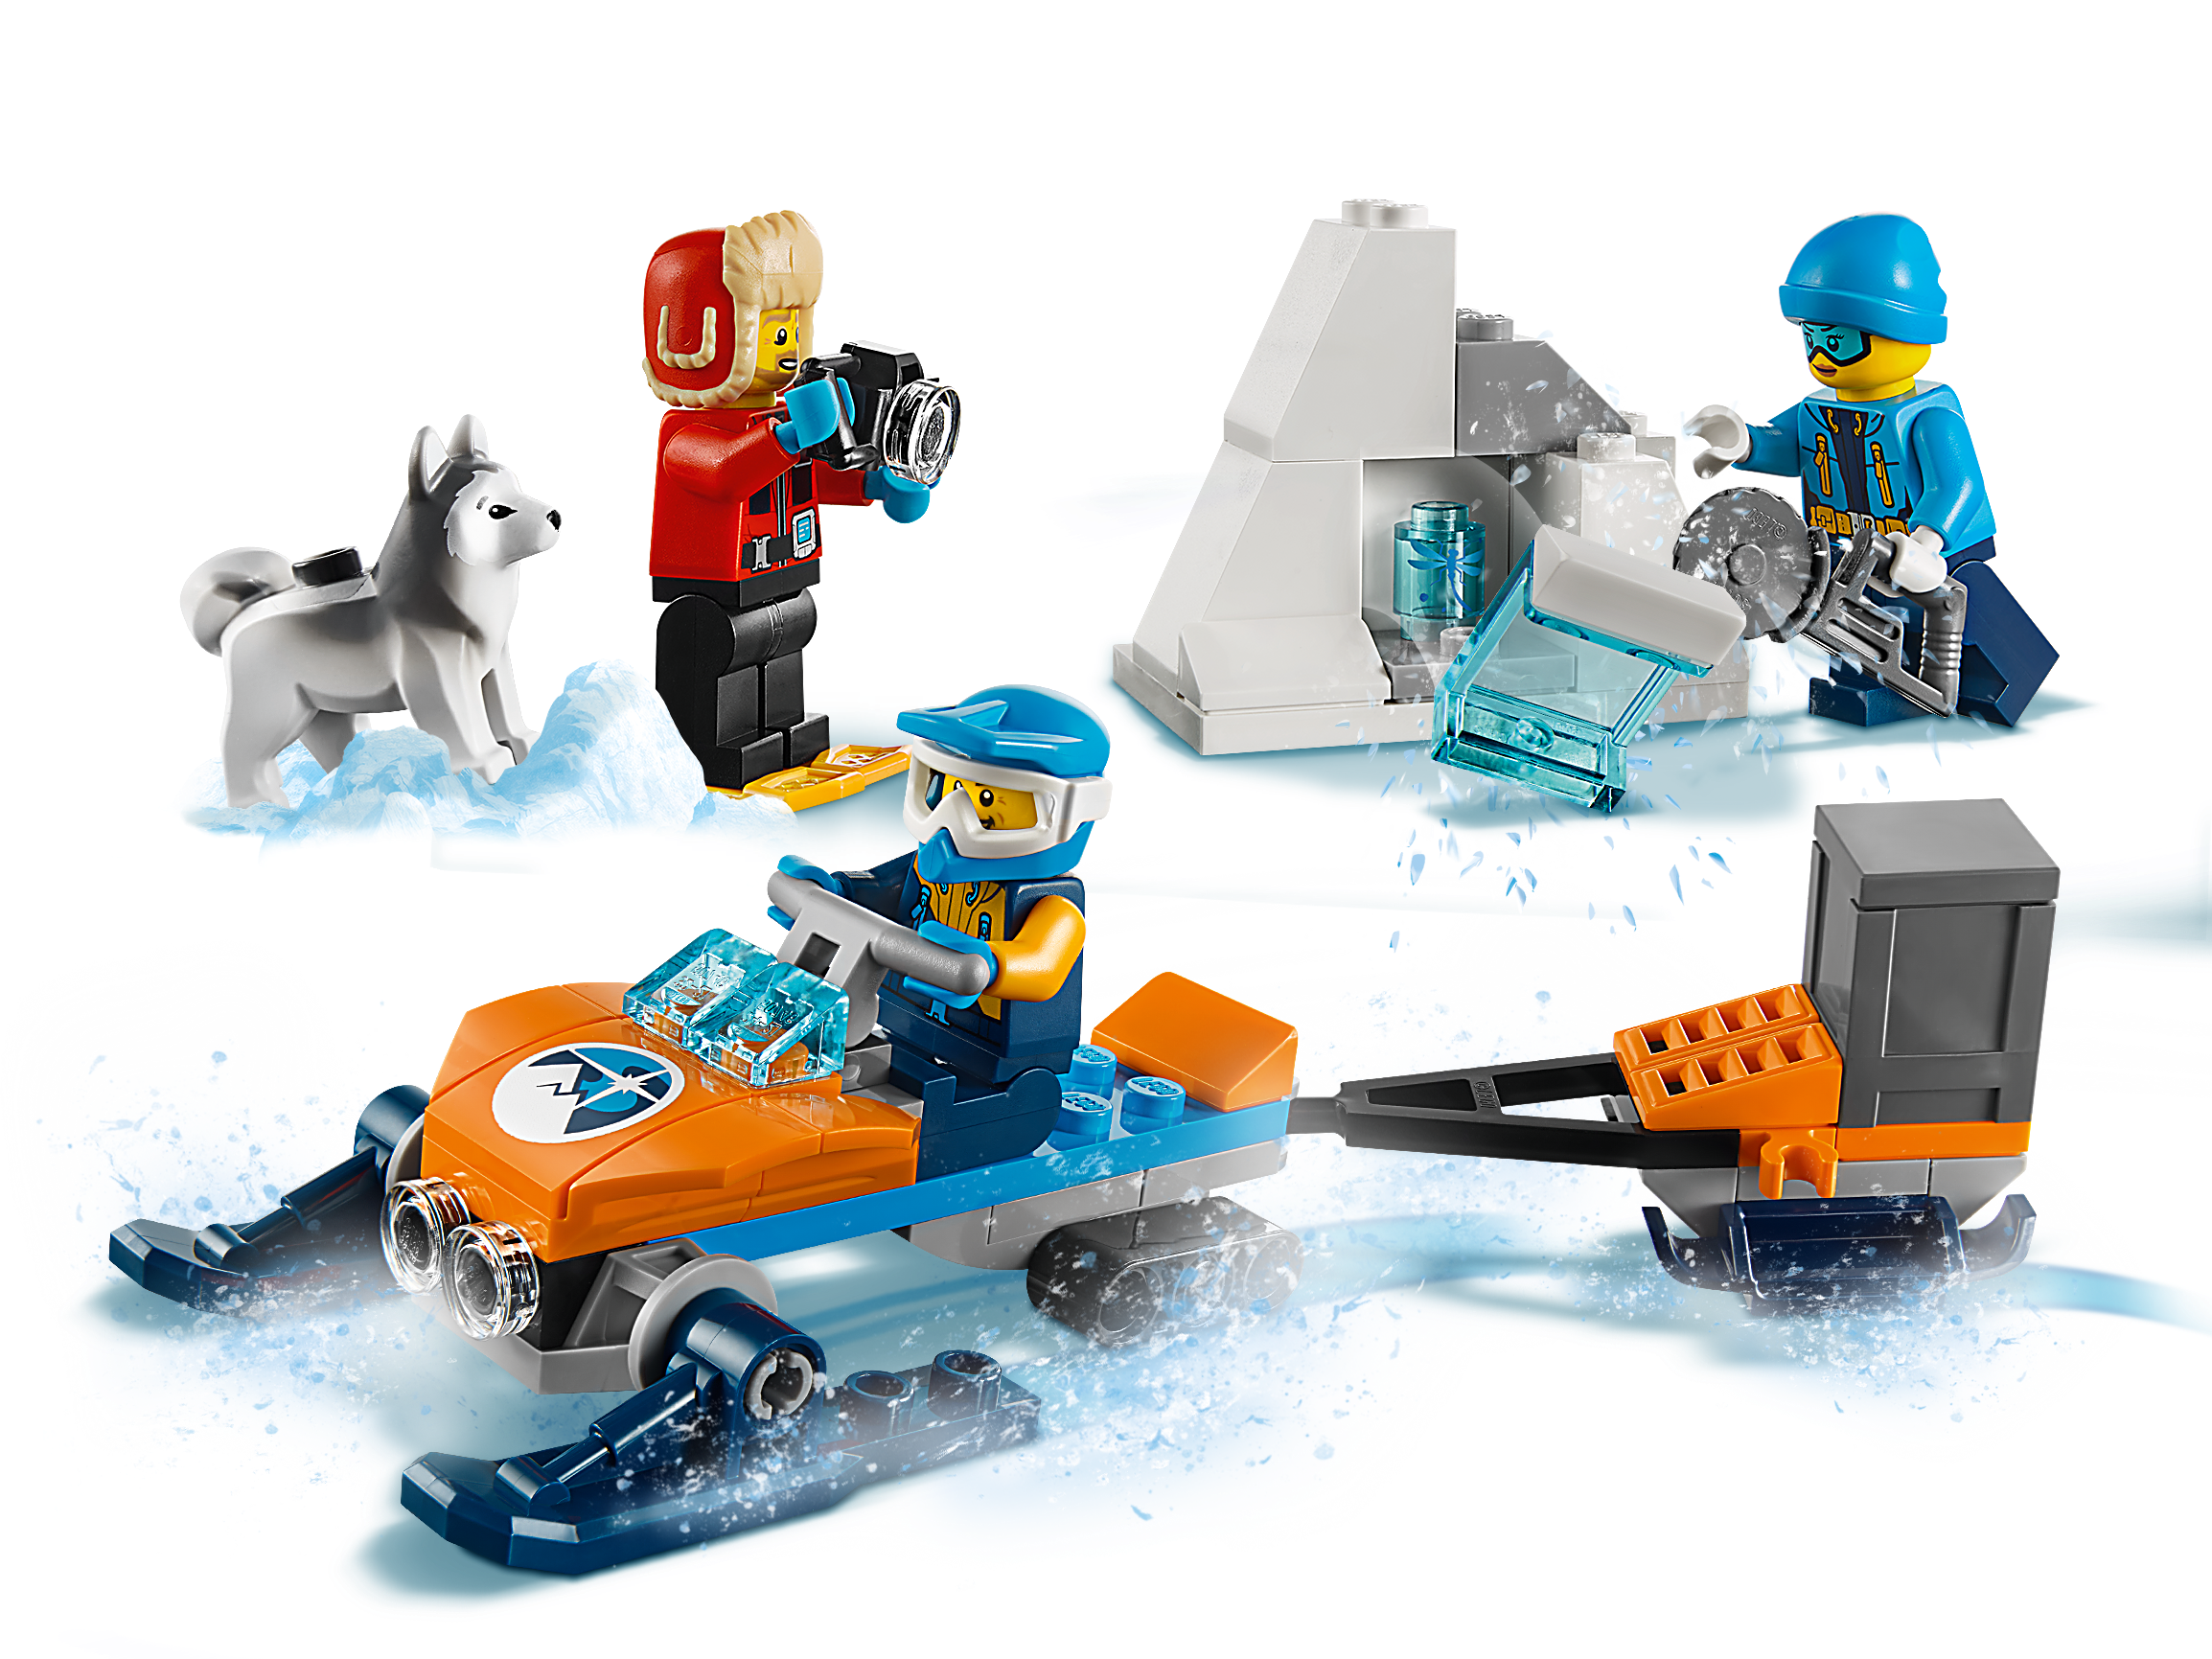 dentist Imaginative training Arctic Exploration Team 60191 | City | Buy online at the Official LEGO®  Shop US